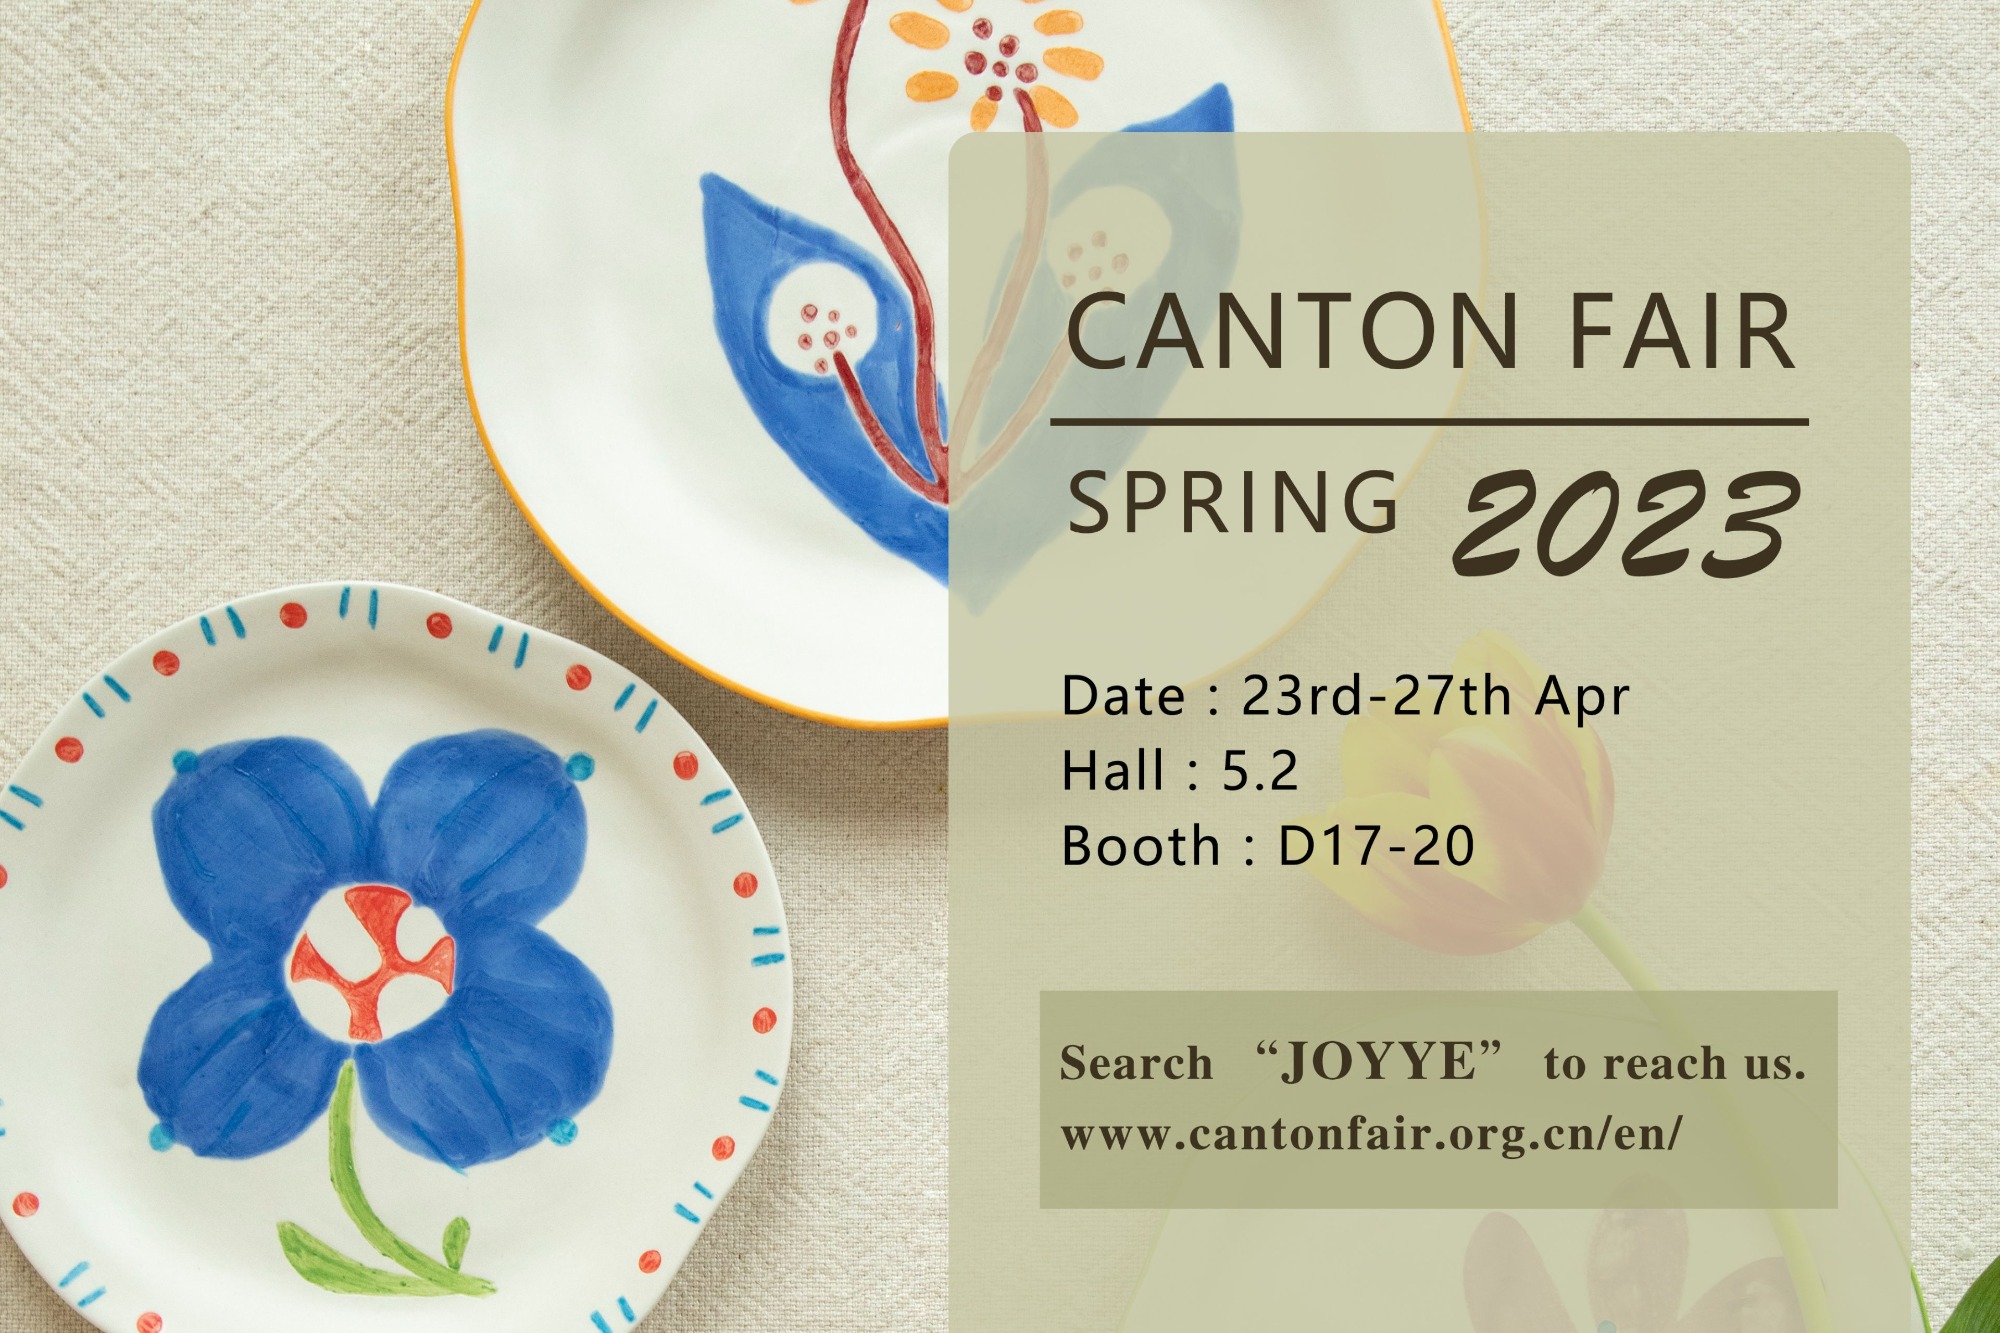 Joyye 2023 Spring Canton Fair Invitation